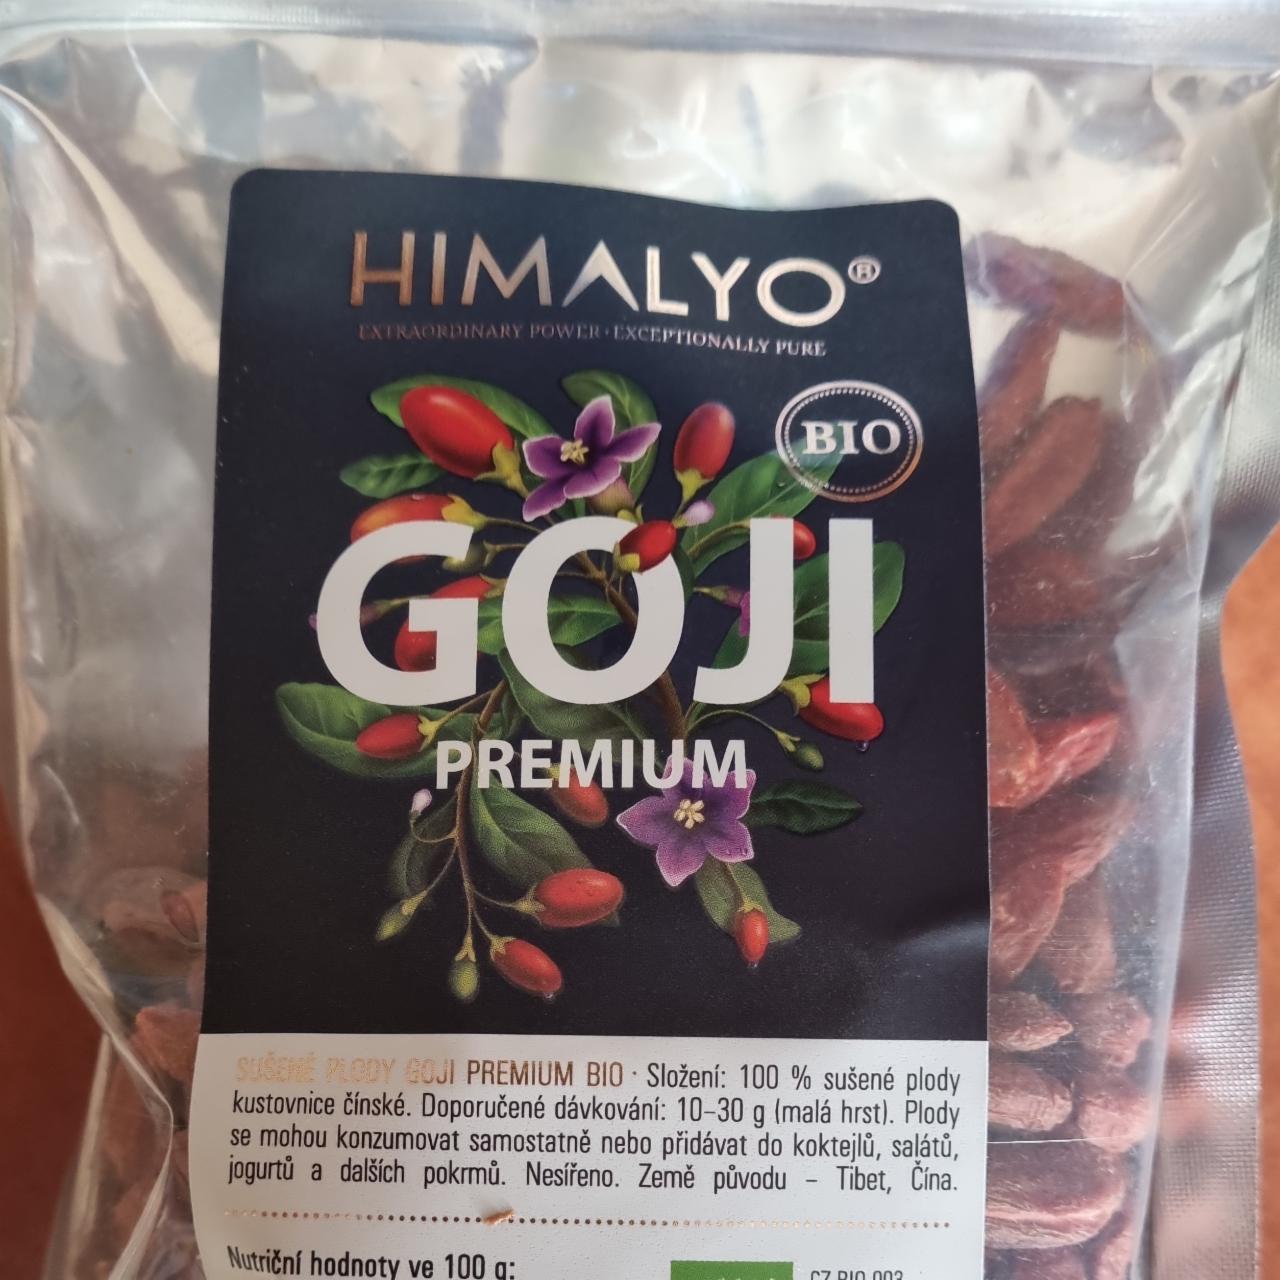 Fotografie - Goji Premium Himalyo